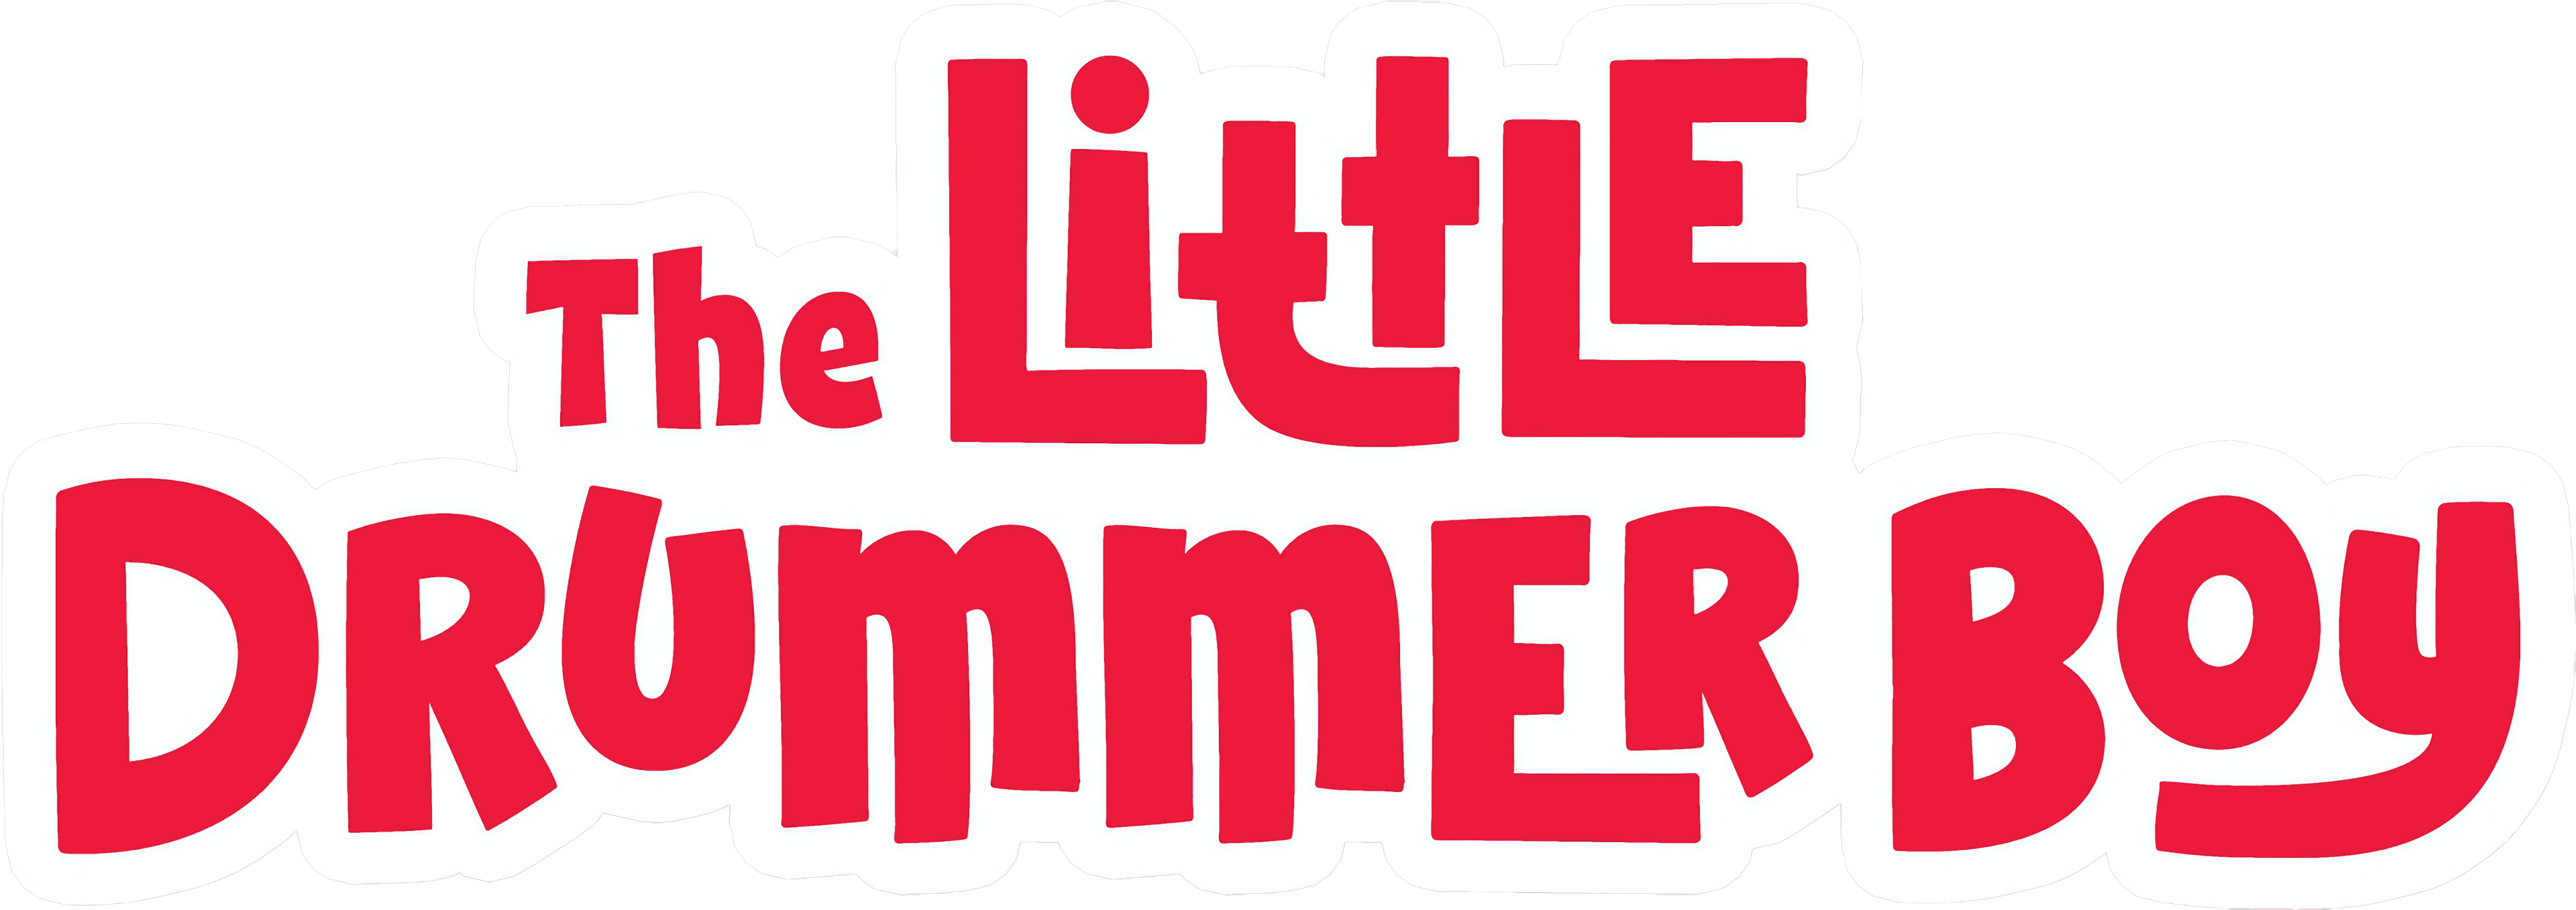 The Little Drummer Boy logo